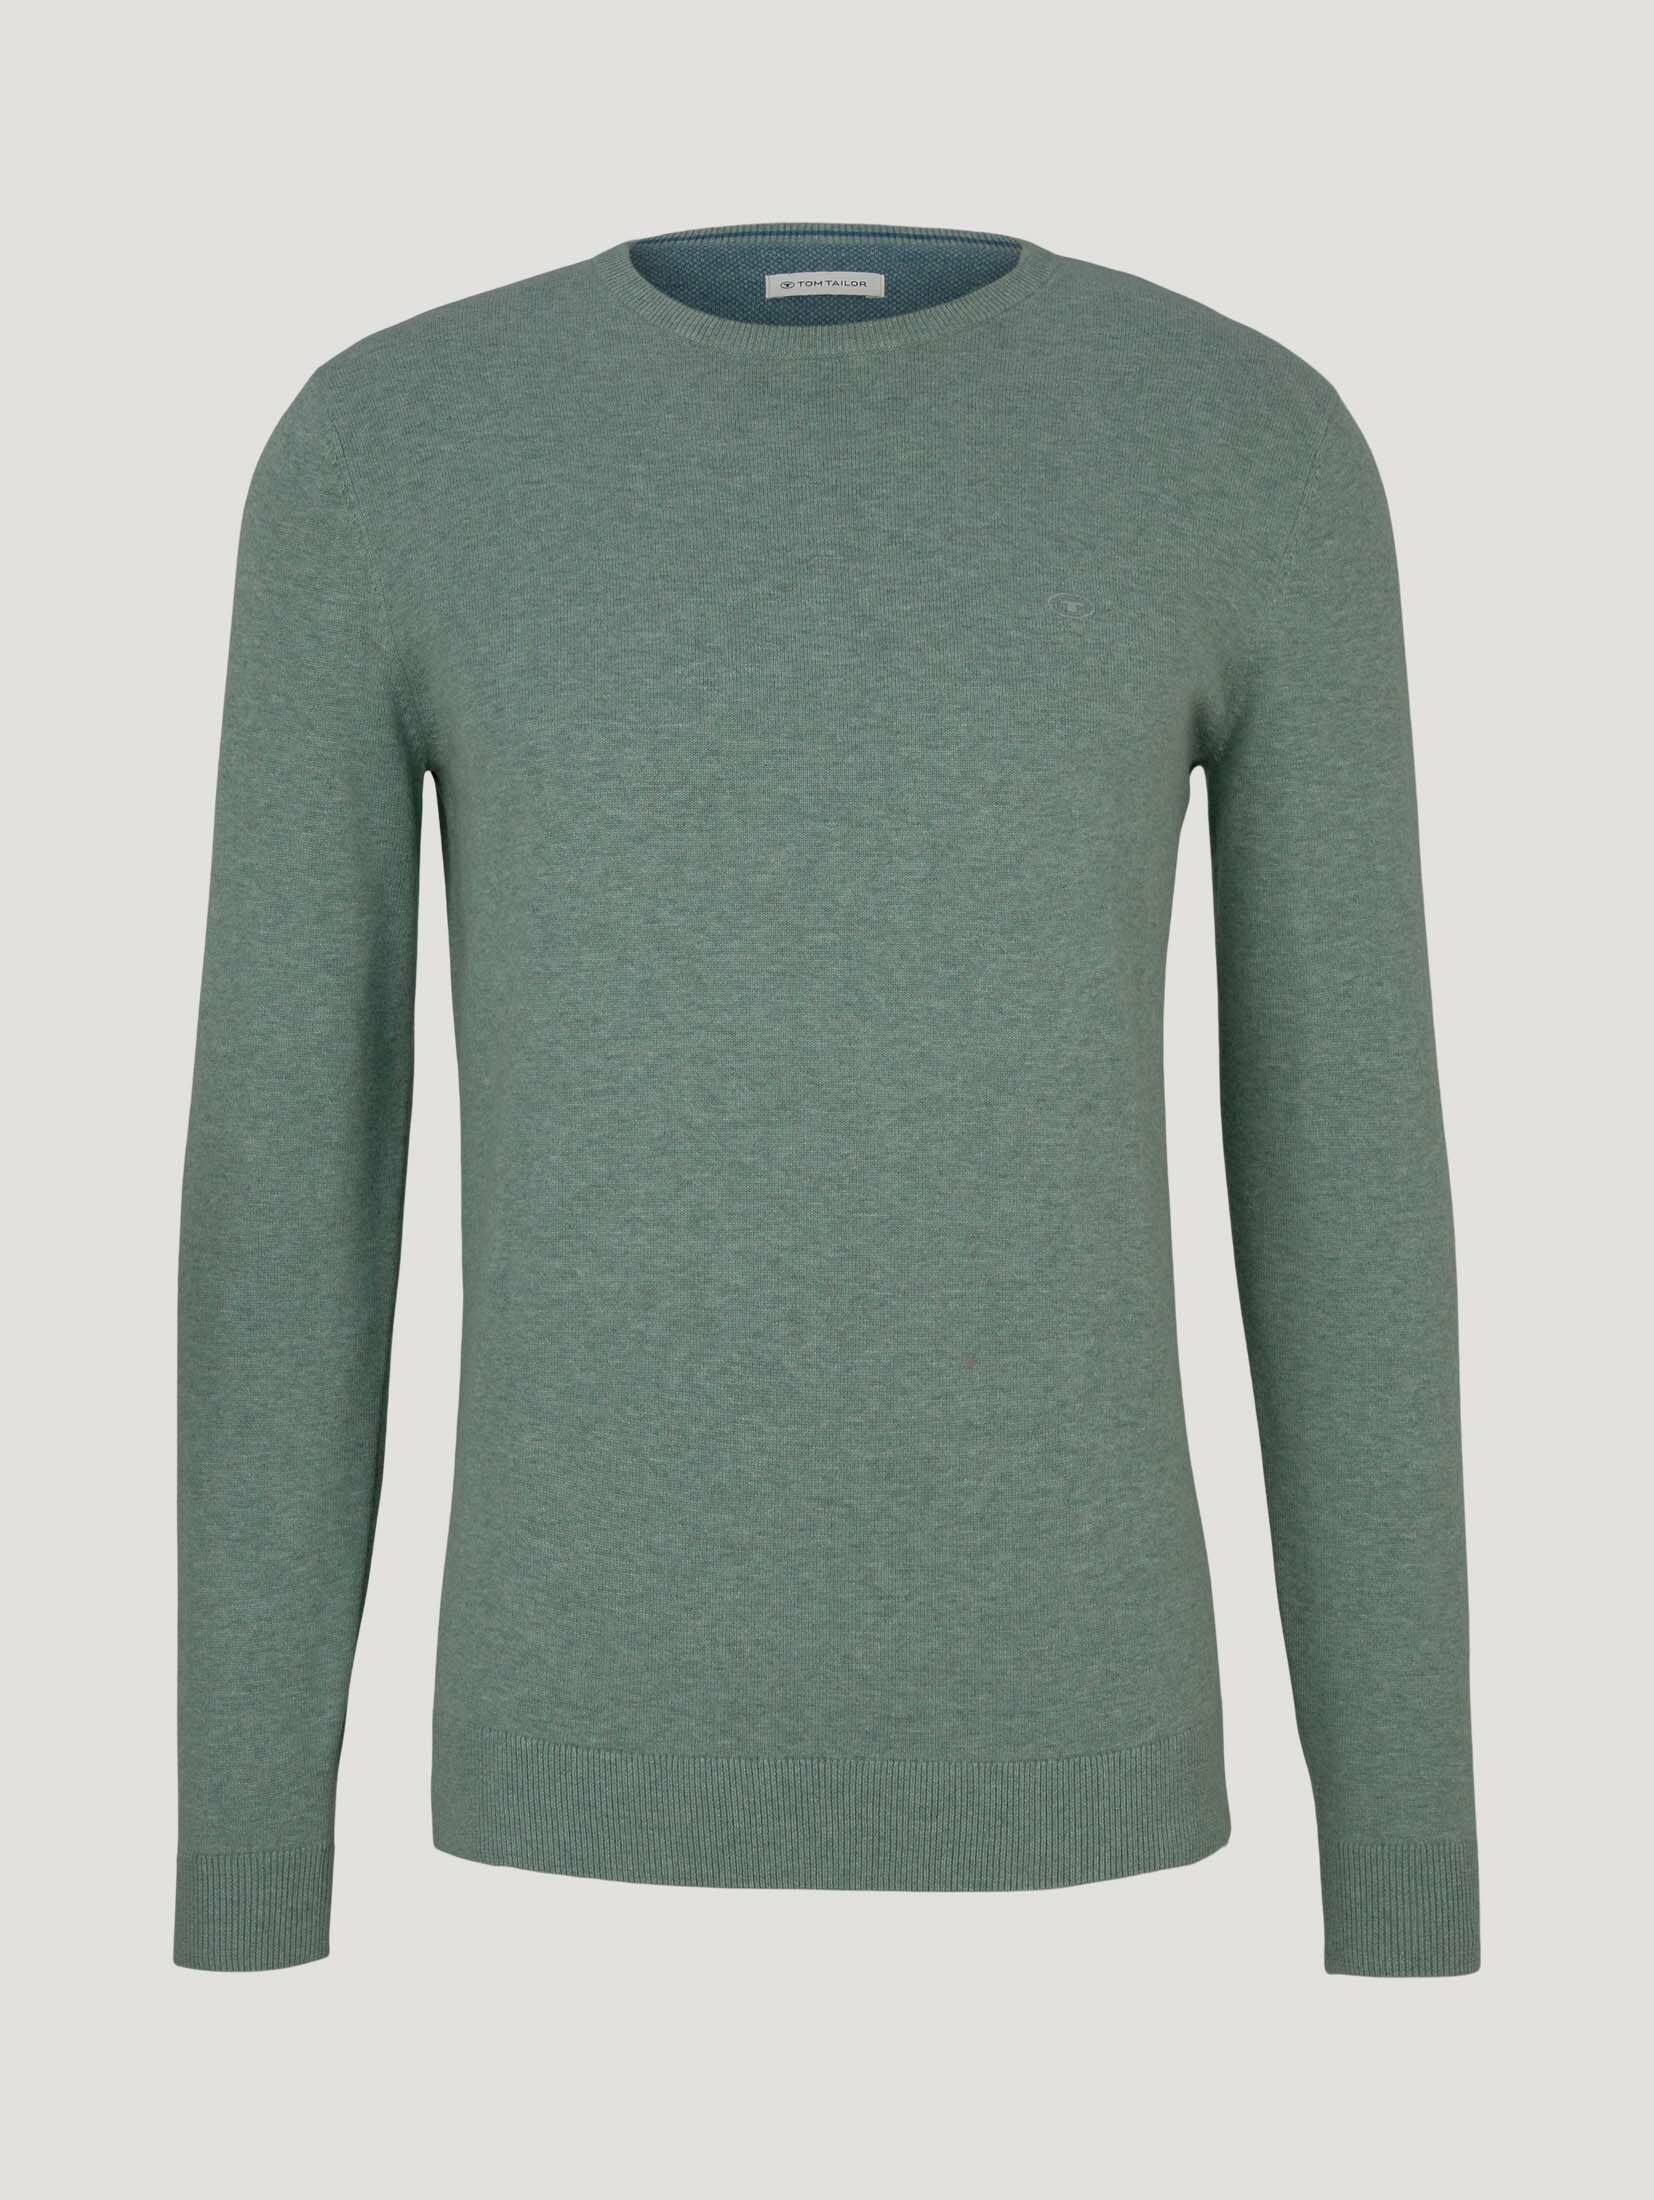 Пуловер Tom Tailor Tom Tailor Strick, зеленый пуловер tom tailor tom tailor strick зеленый